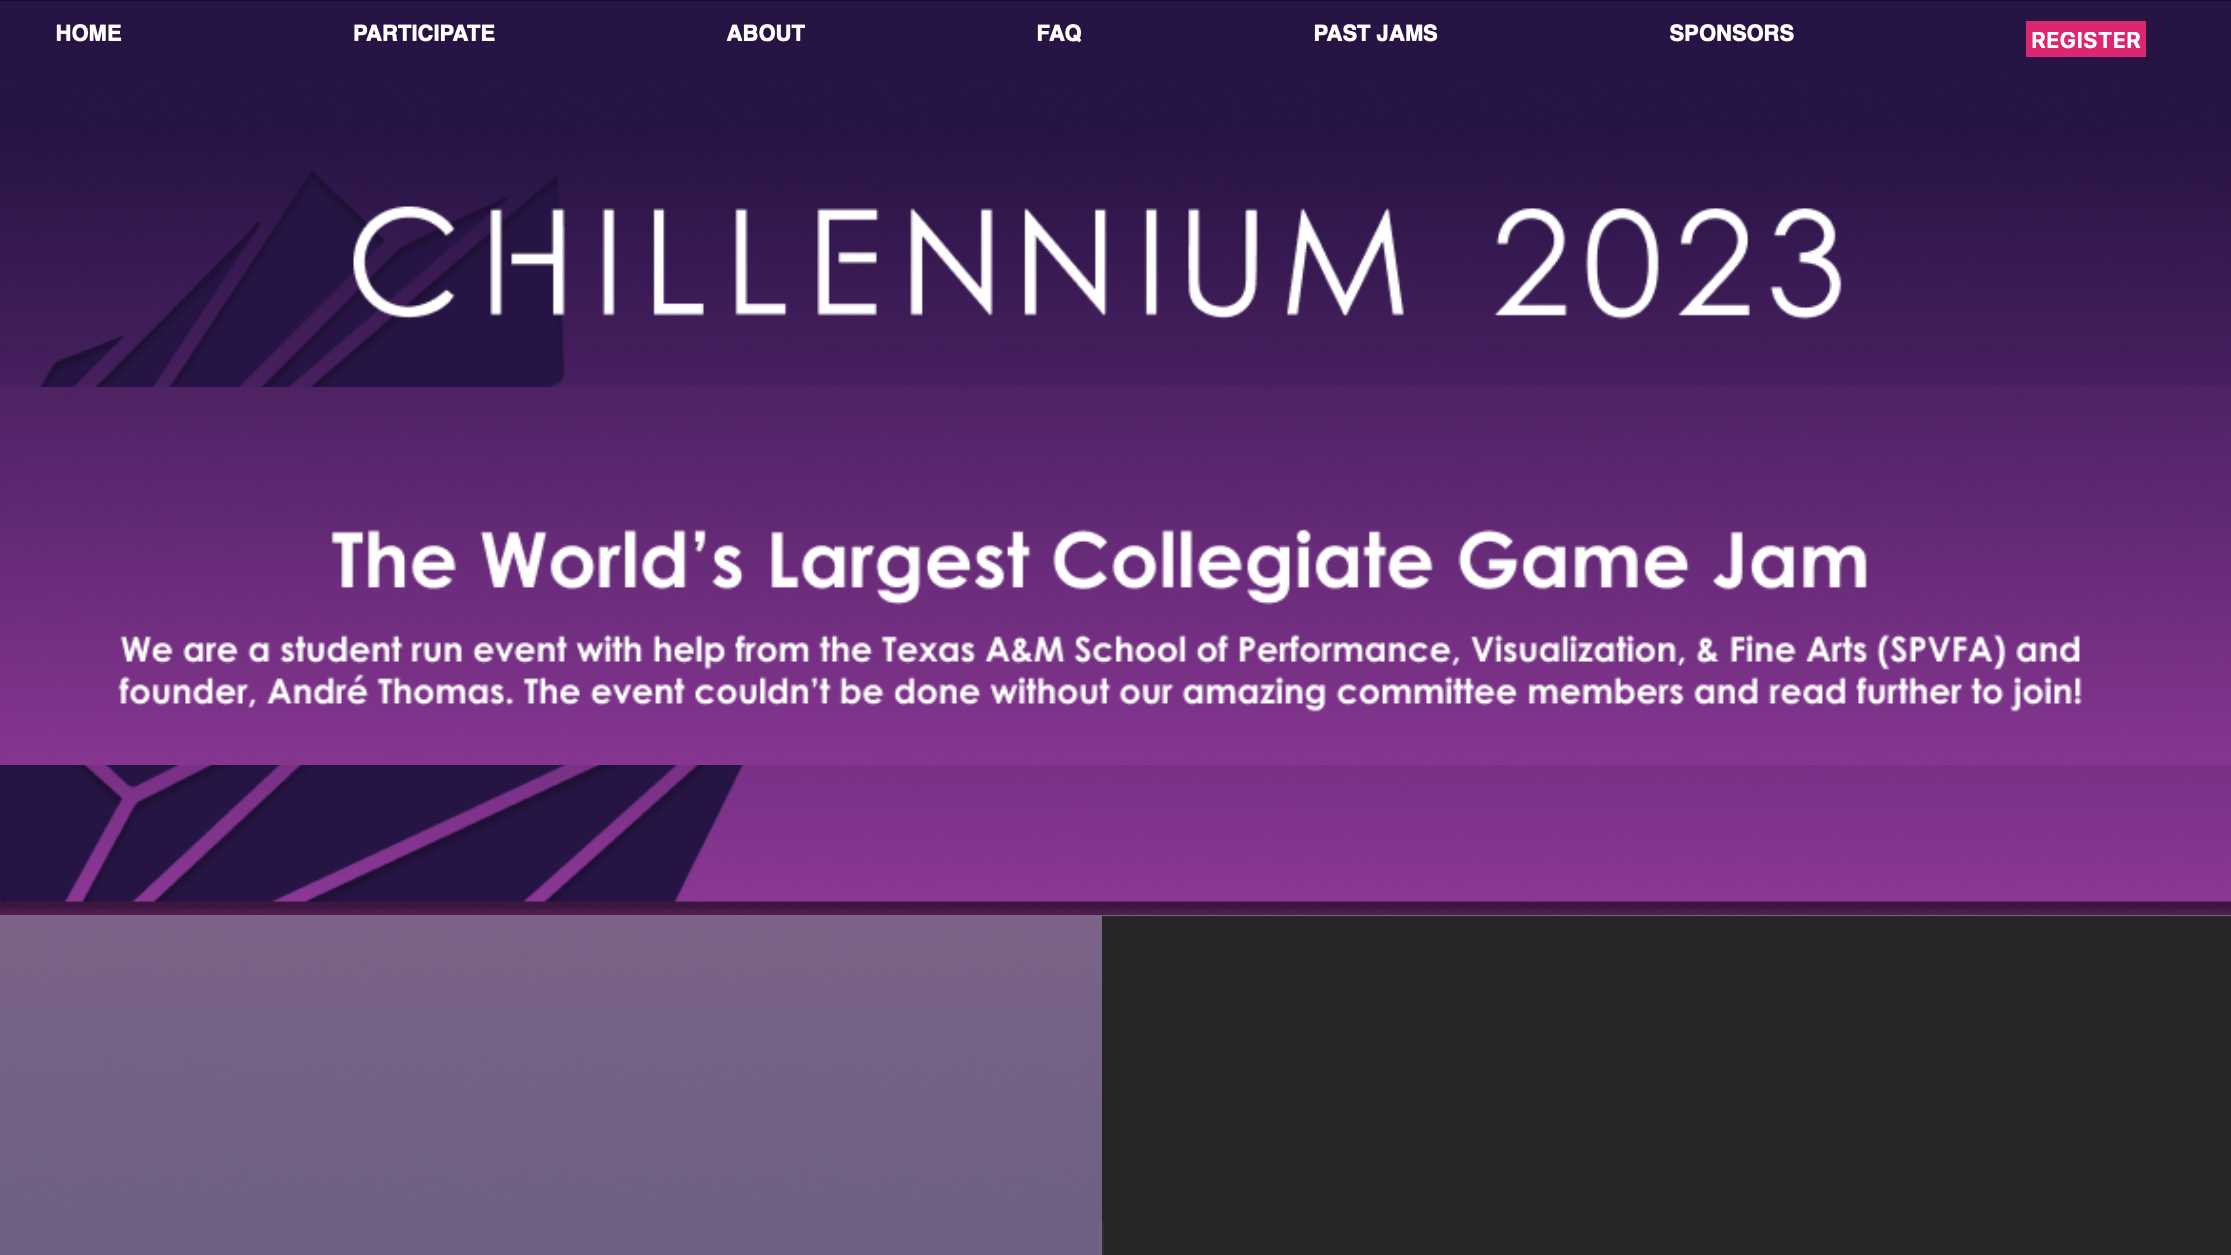 LSU - Chillennium 2023 news story